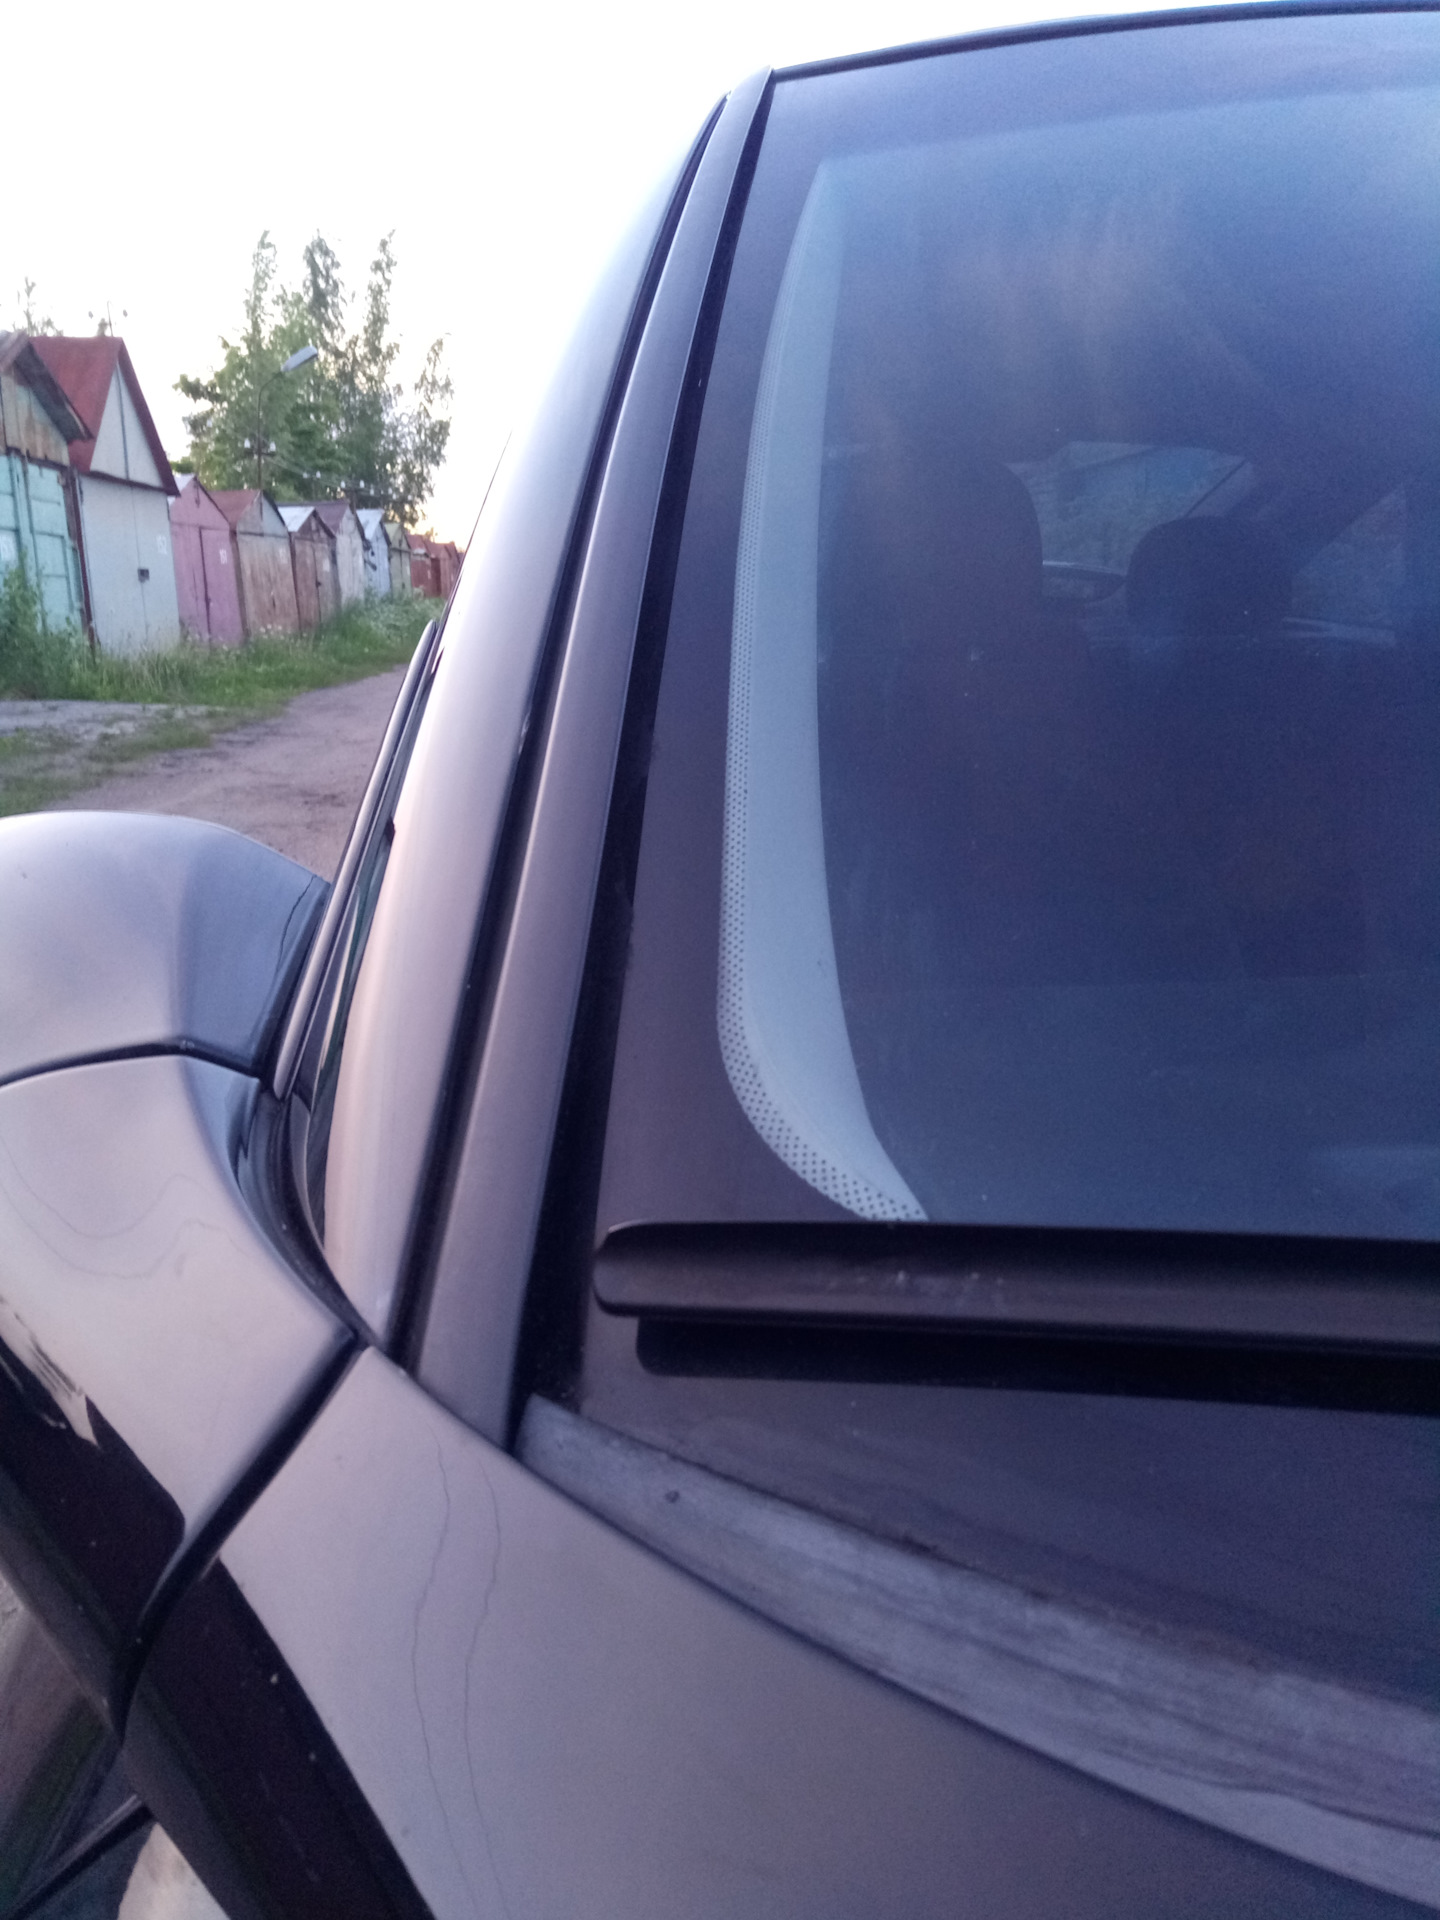 Лобовое вектра б. Молдинг лобового стекла Opel Vectra b. Vectra b лобовое стекло. Пластик лобового стекла Opel Vectra b. Молдинг на Опель Вектра б 1996г на стекло.